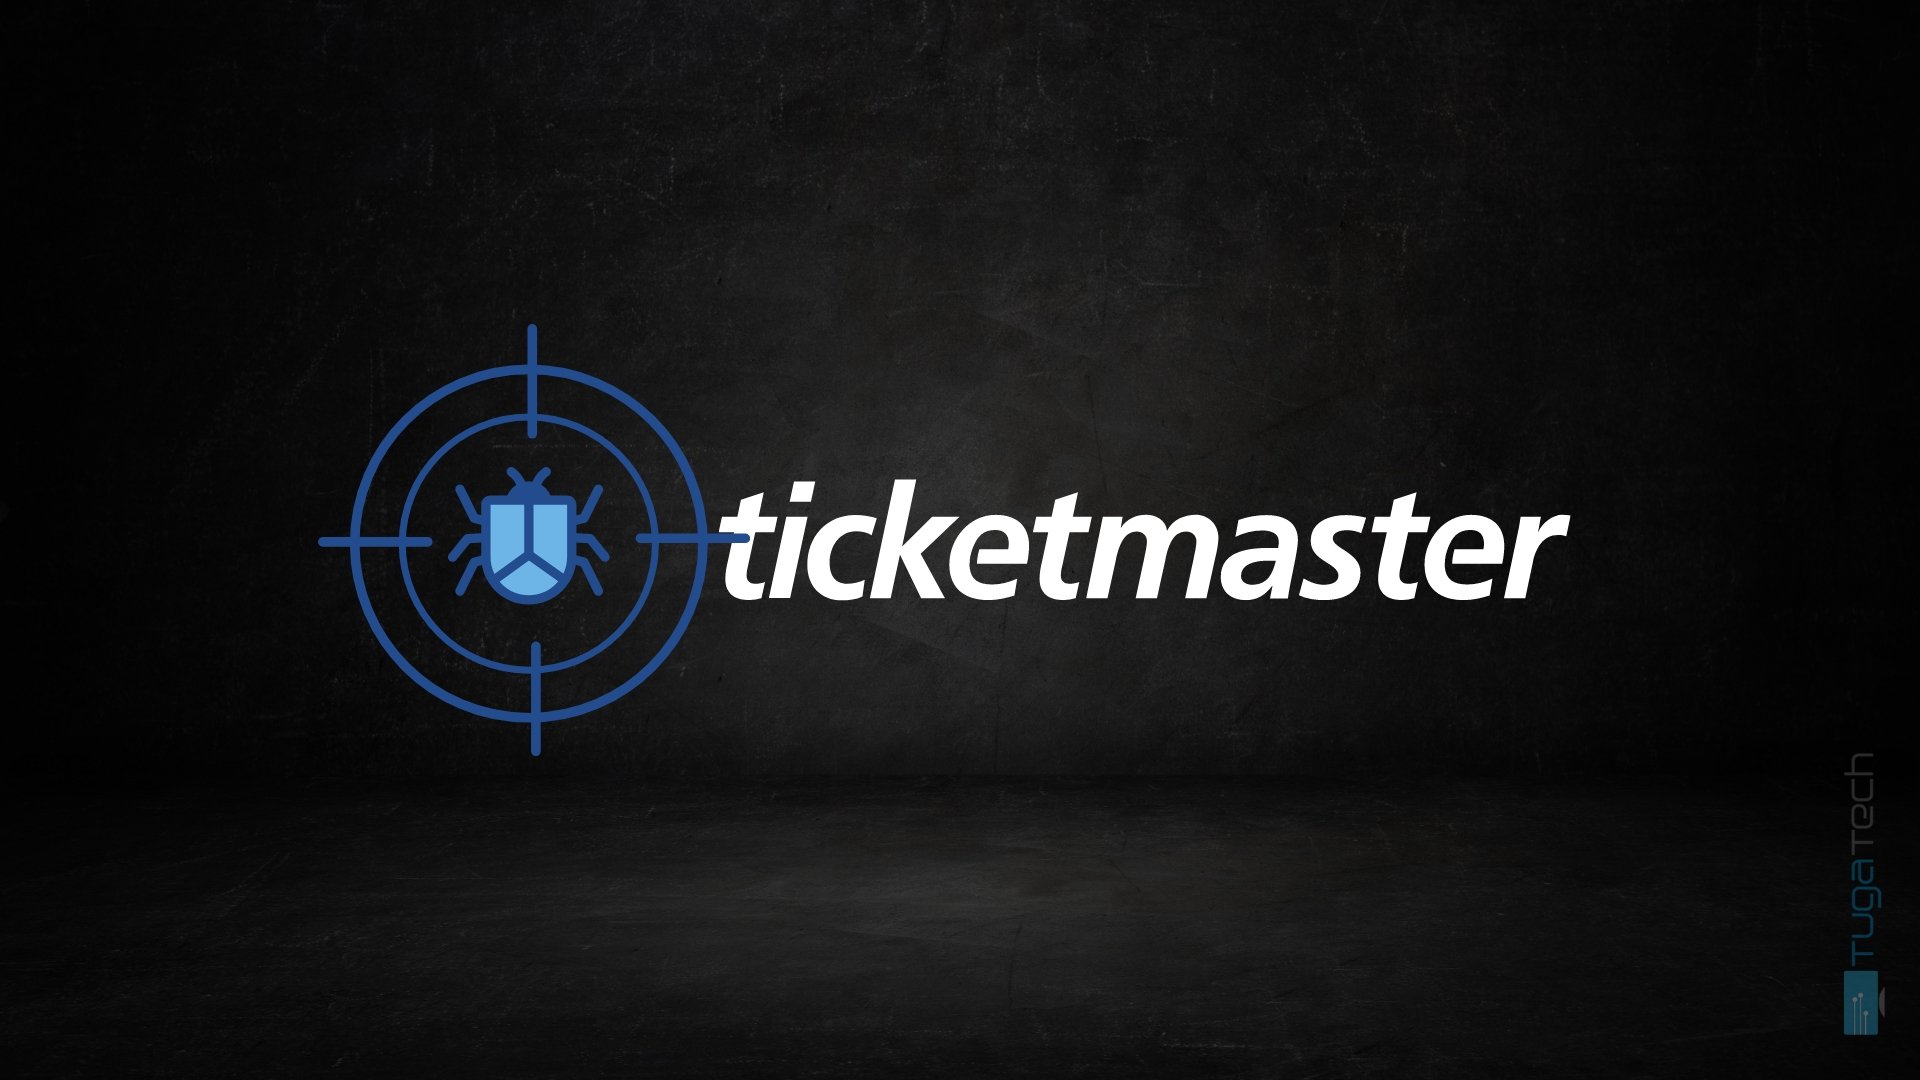 Ticketmaster confirma roubo de dados de 560 milhões de clientes